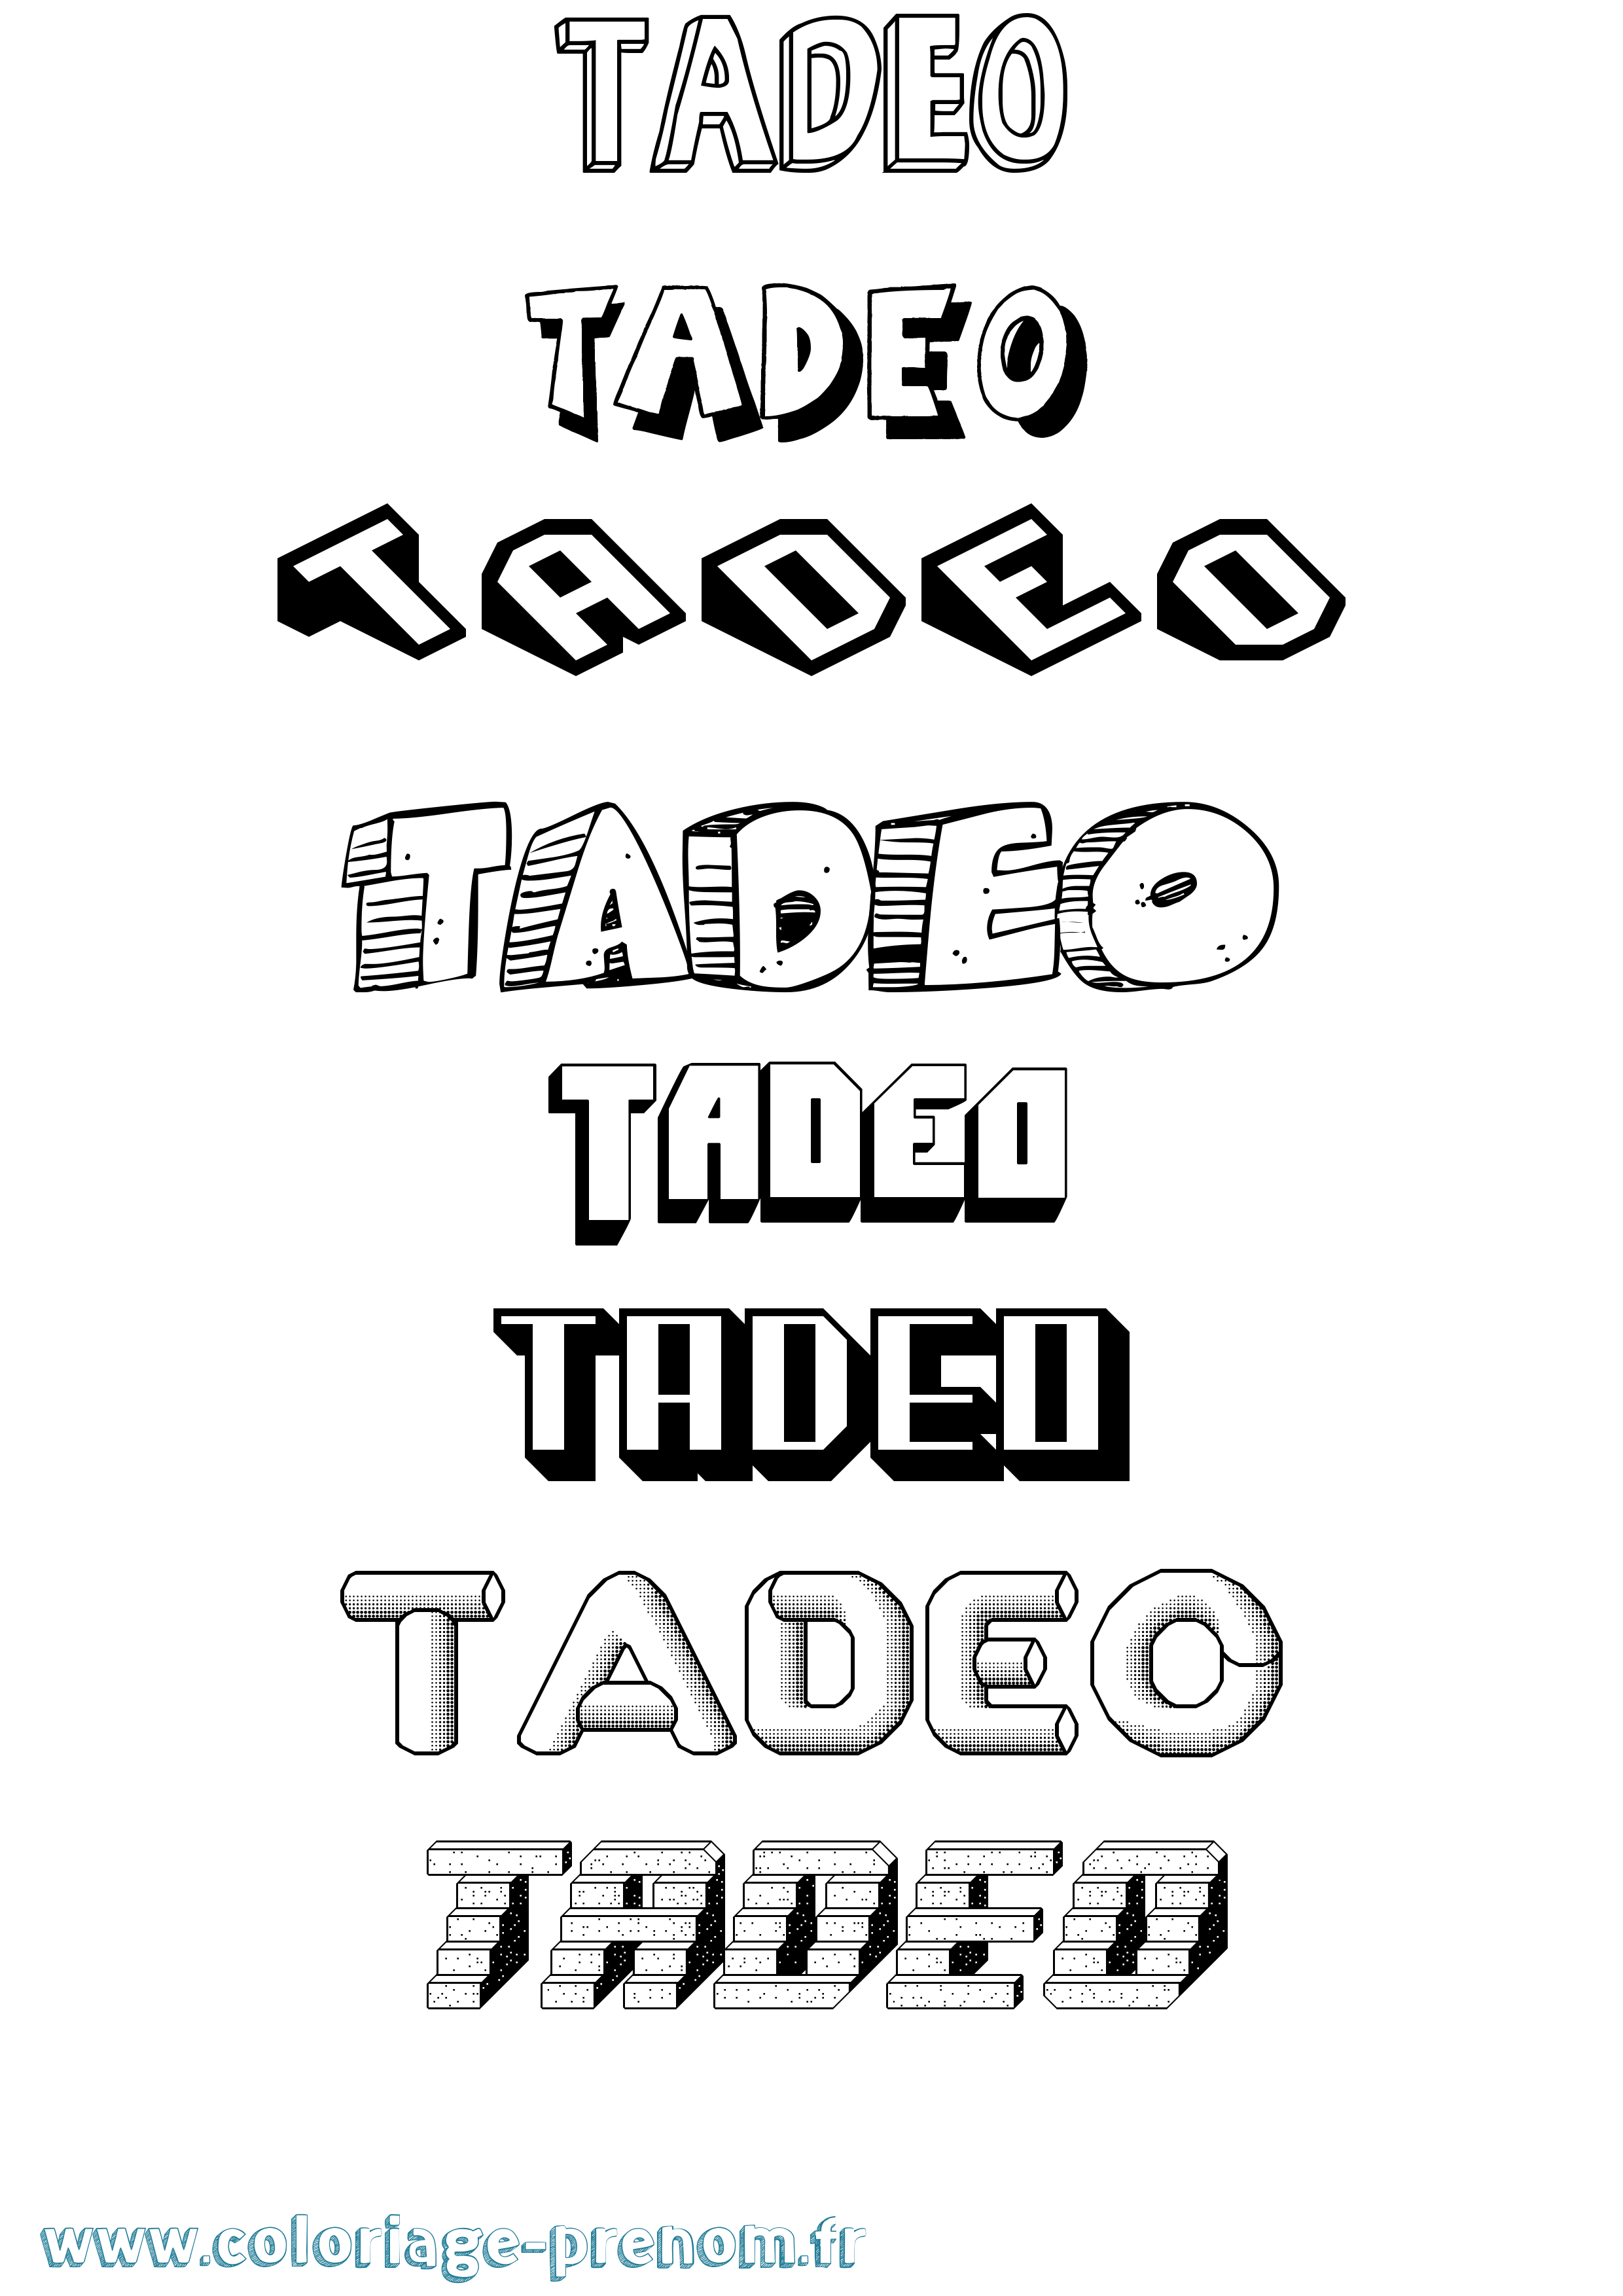 Coloriage prénom Tadeo Effet 3D